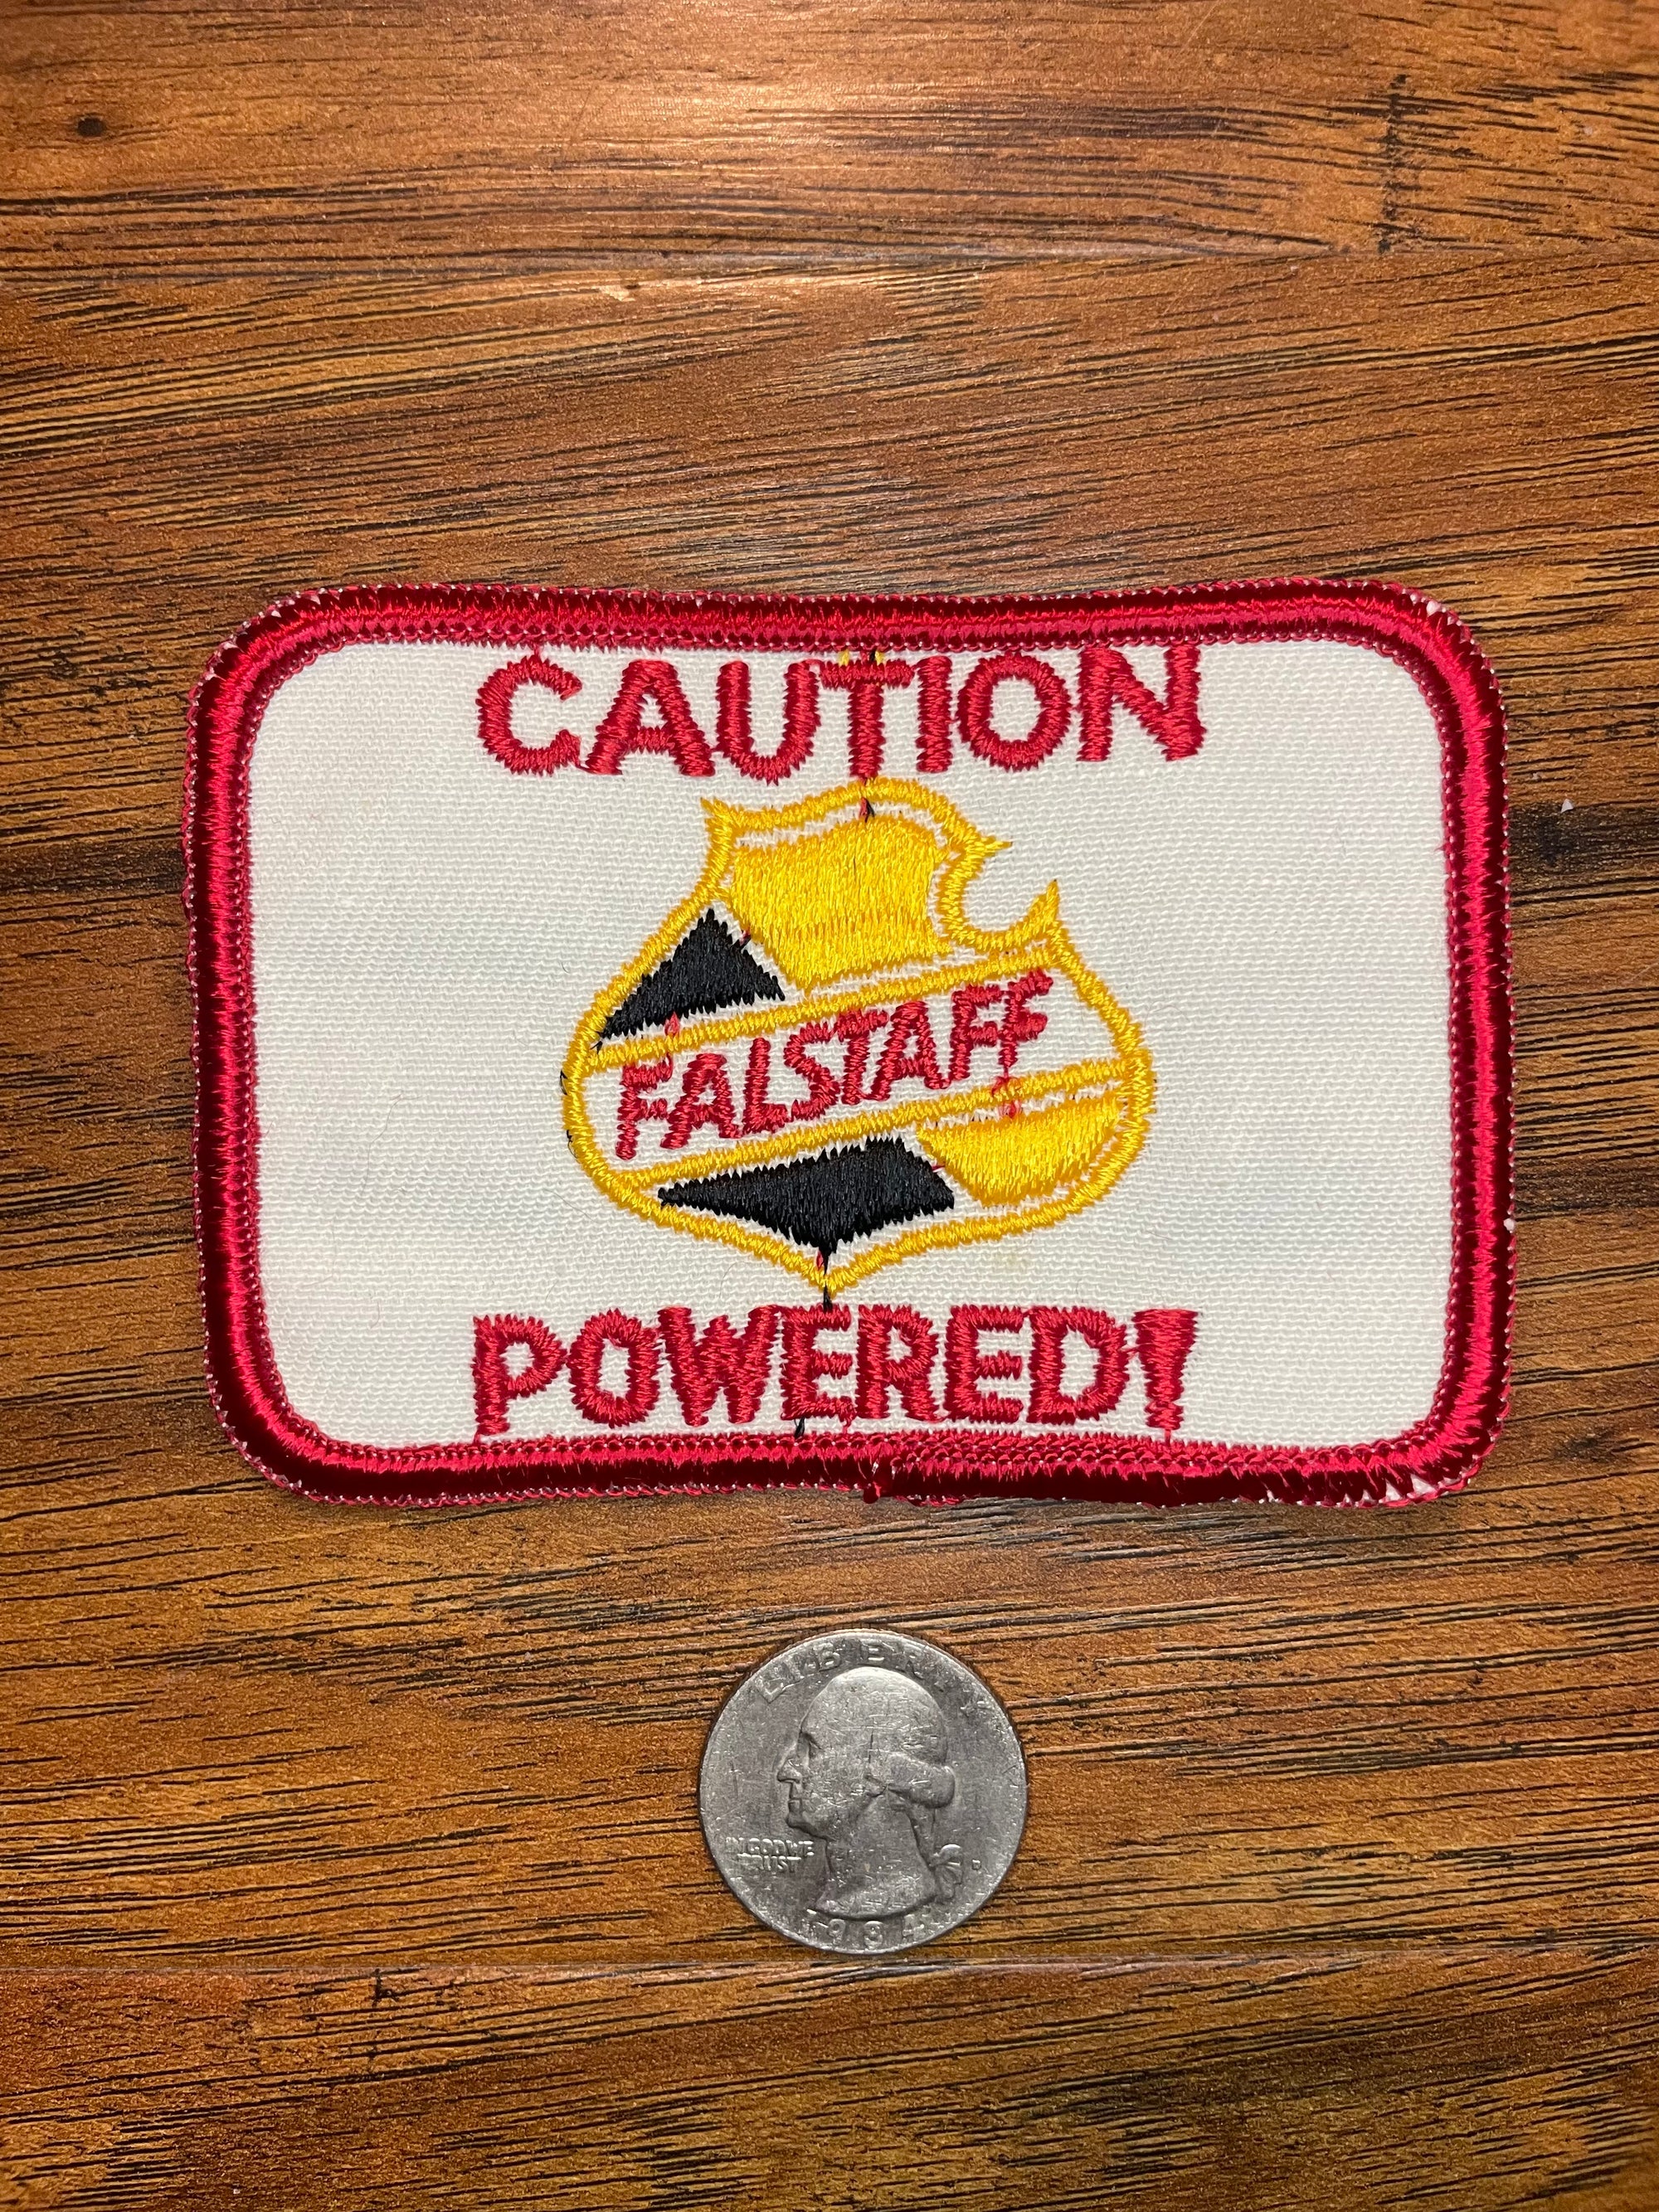 Vintage Caution Falstaff Powered